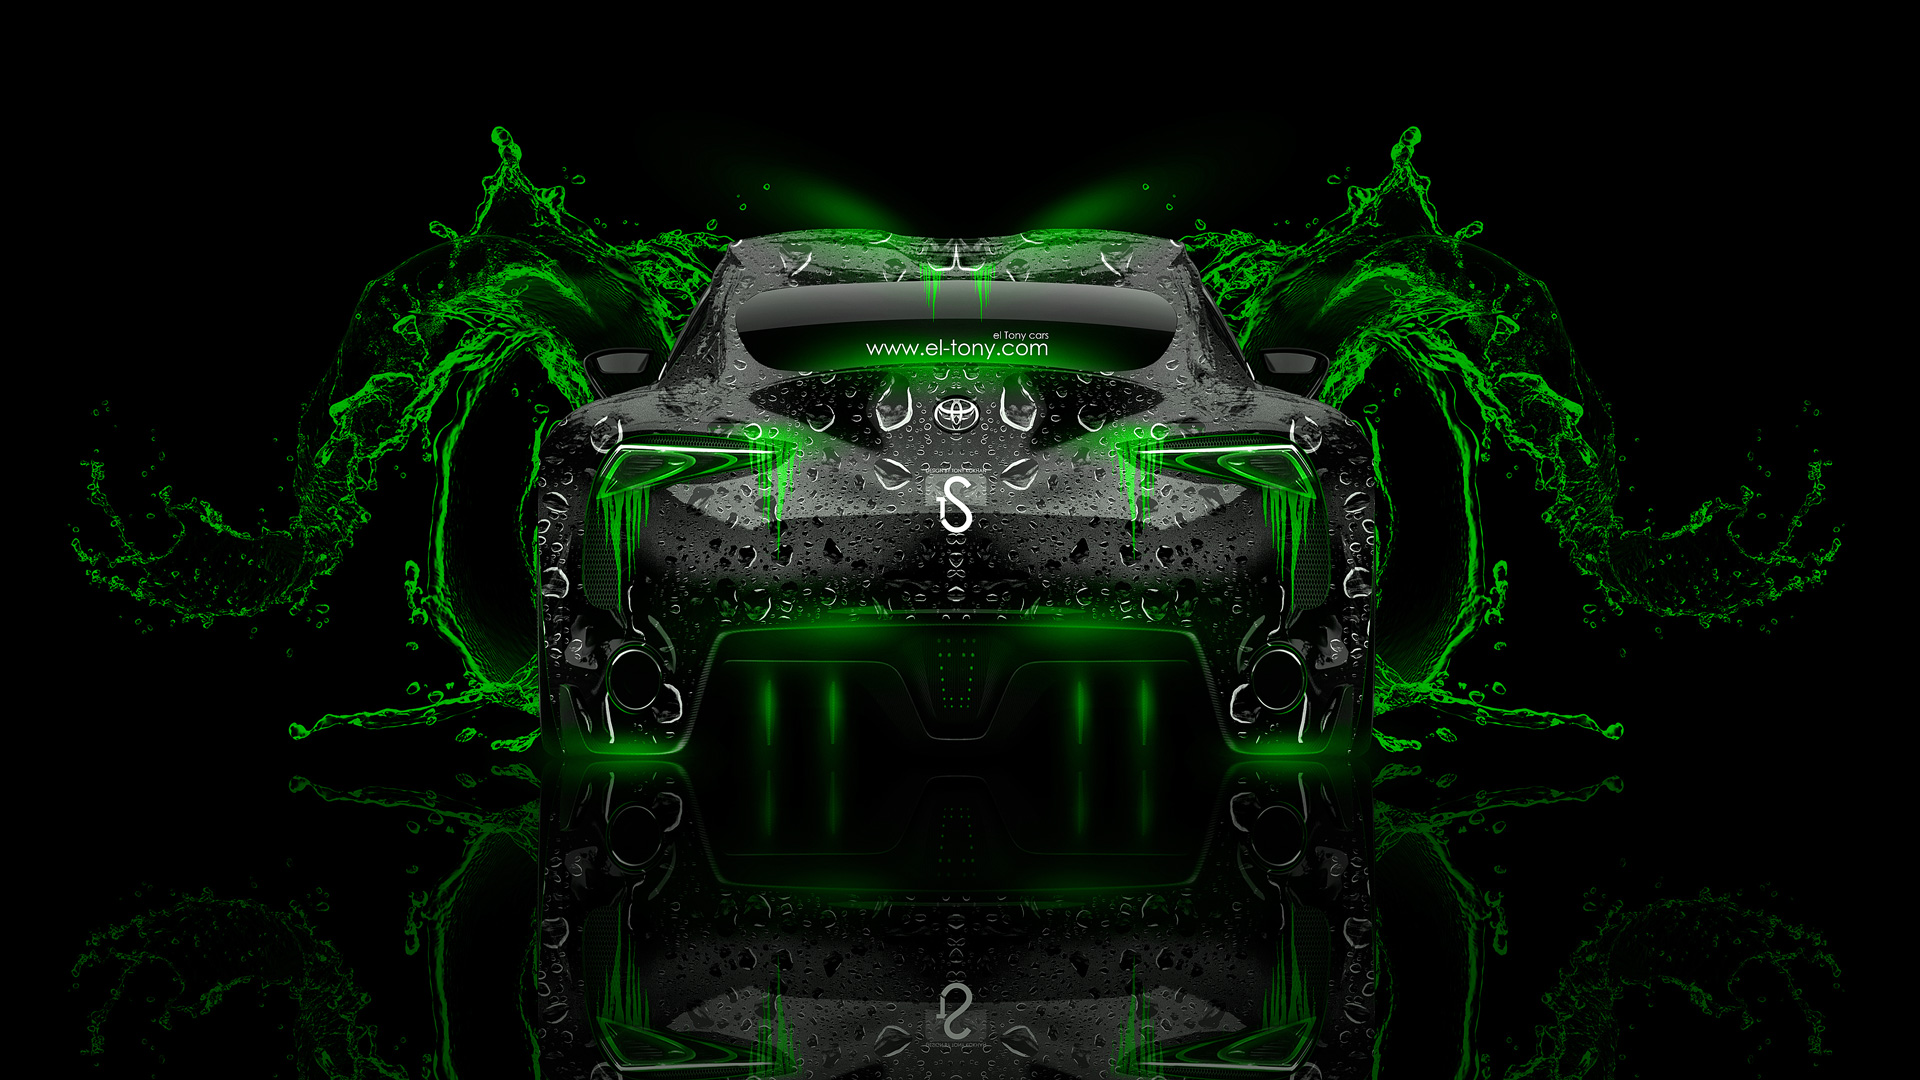 Toyota-FT-1-Back-Green-Neon-Water-Abstract-Car-2014-design-by-Tony-Kokhan-www.el-tony.com_.jpg